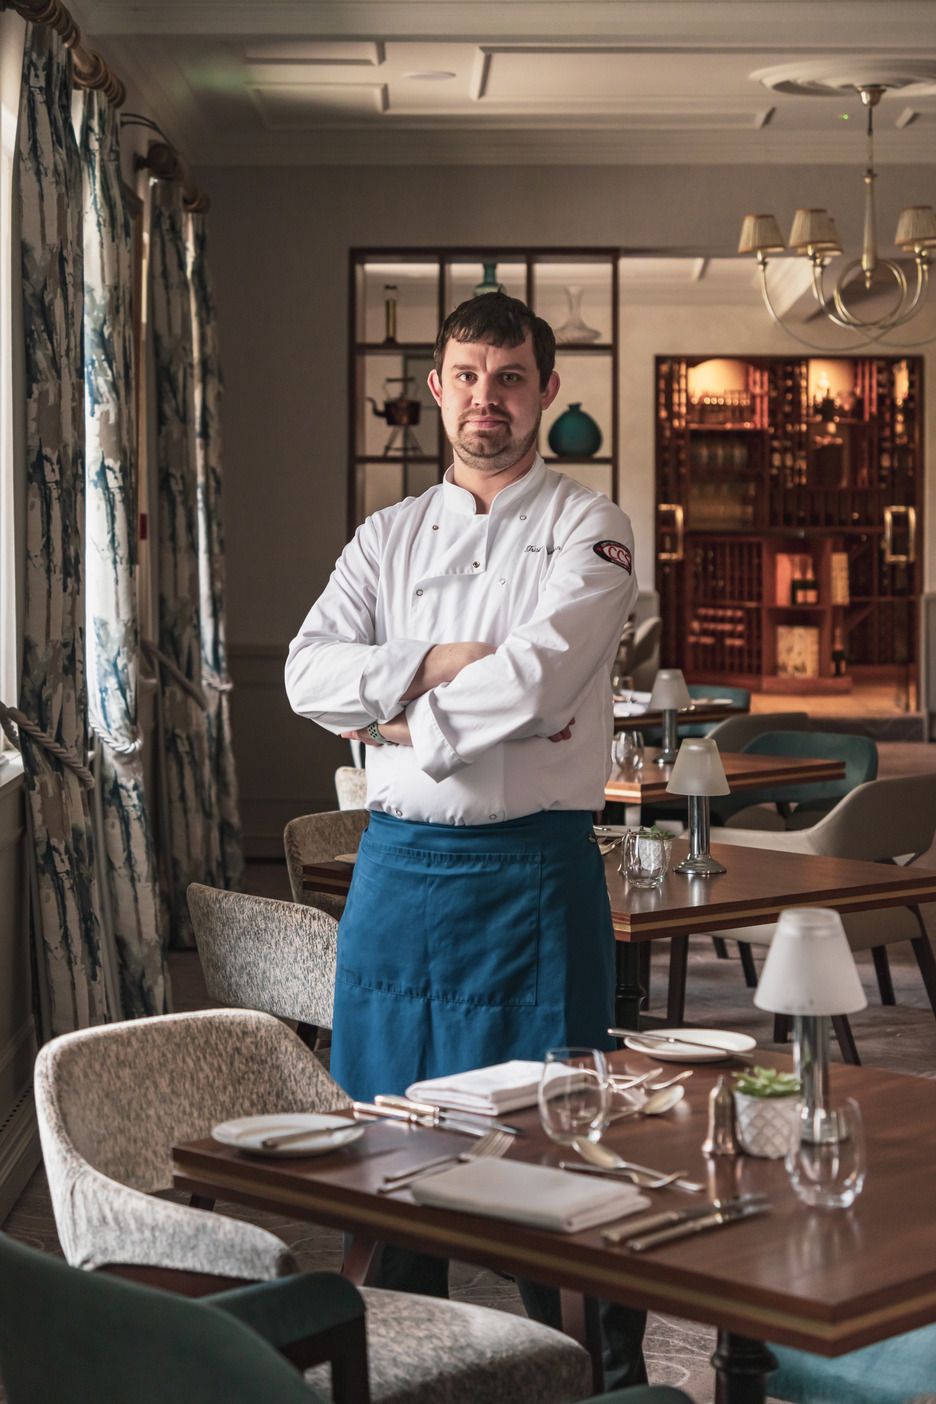 Tristan Prudden, Head Chef at the Borrowdale Hotel